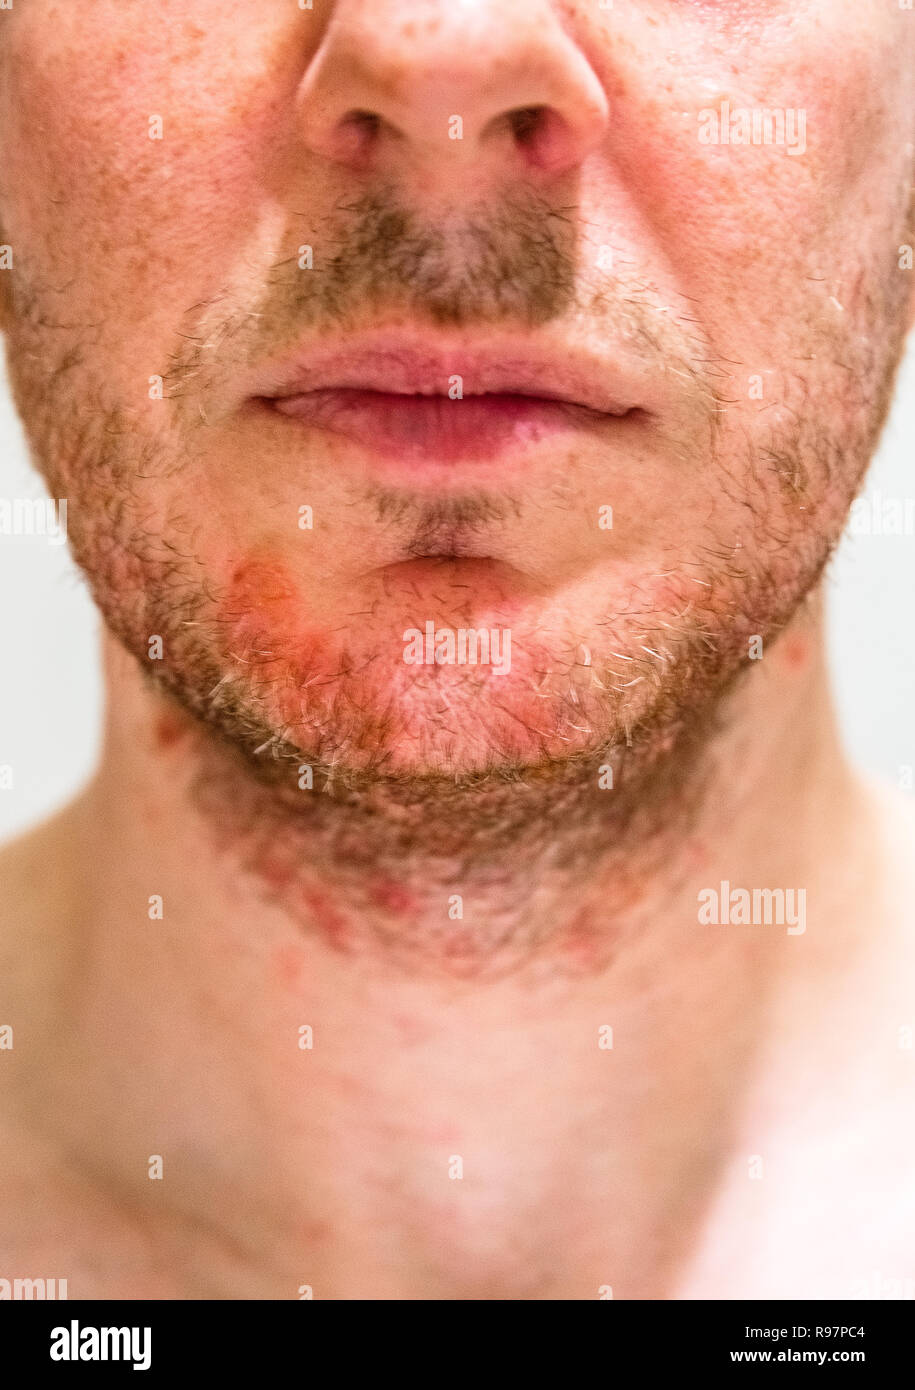 Man with seborrheic dermatitis in the beard area Stock Photo